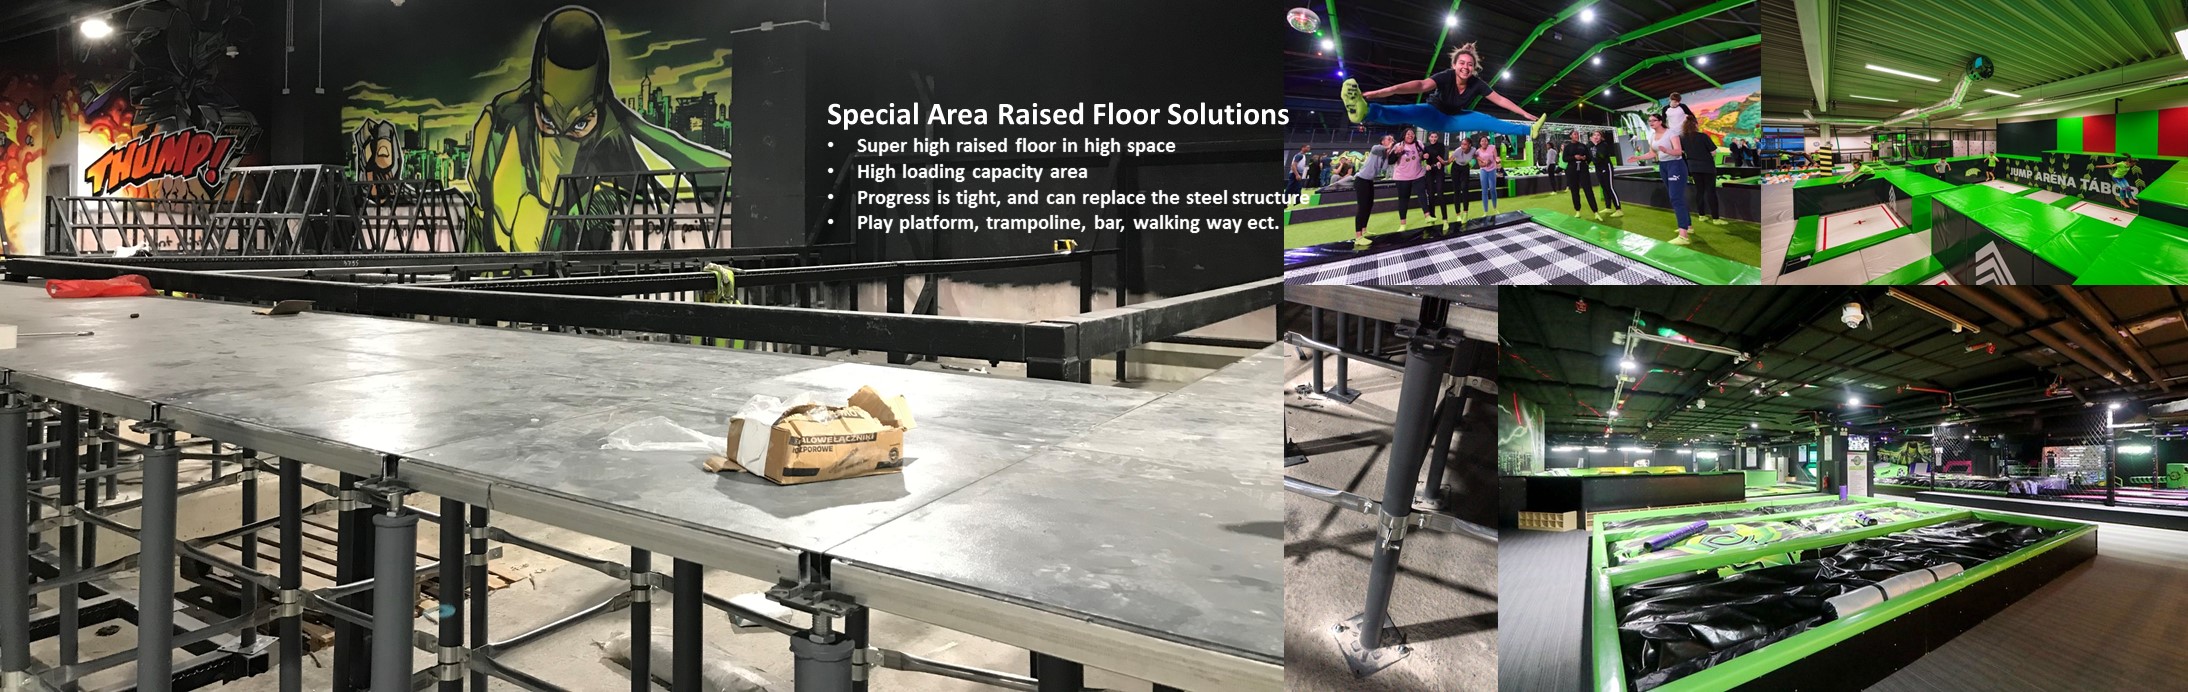 super height special raised floor solutions